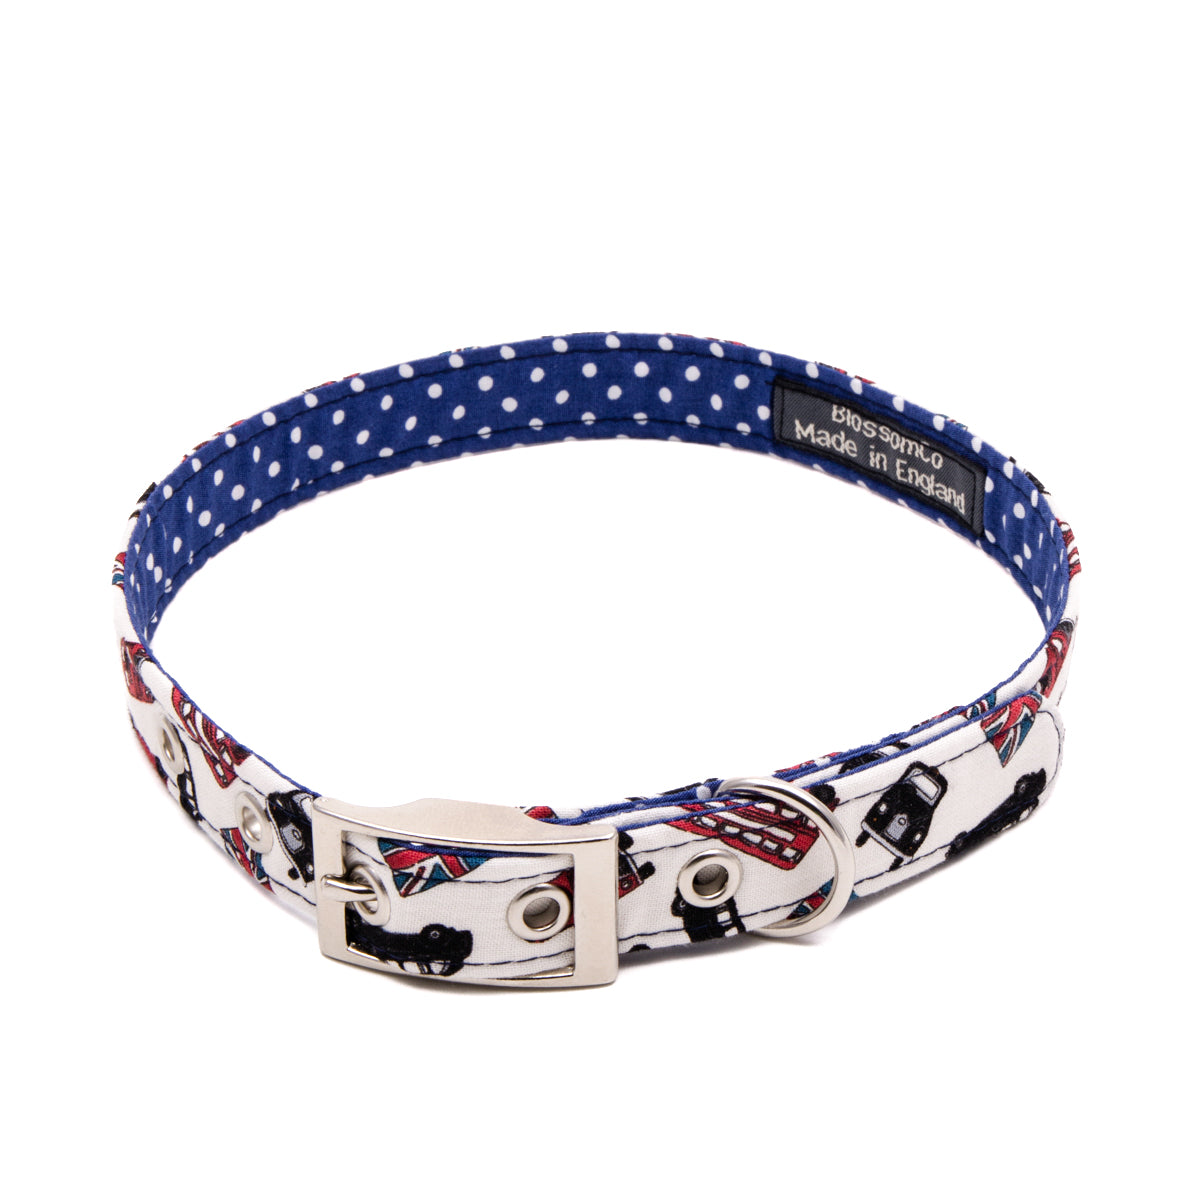 BlossomCo London Style Dog Collar 2